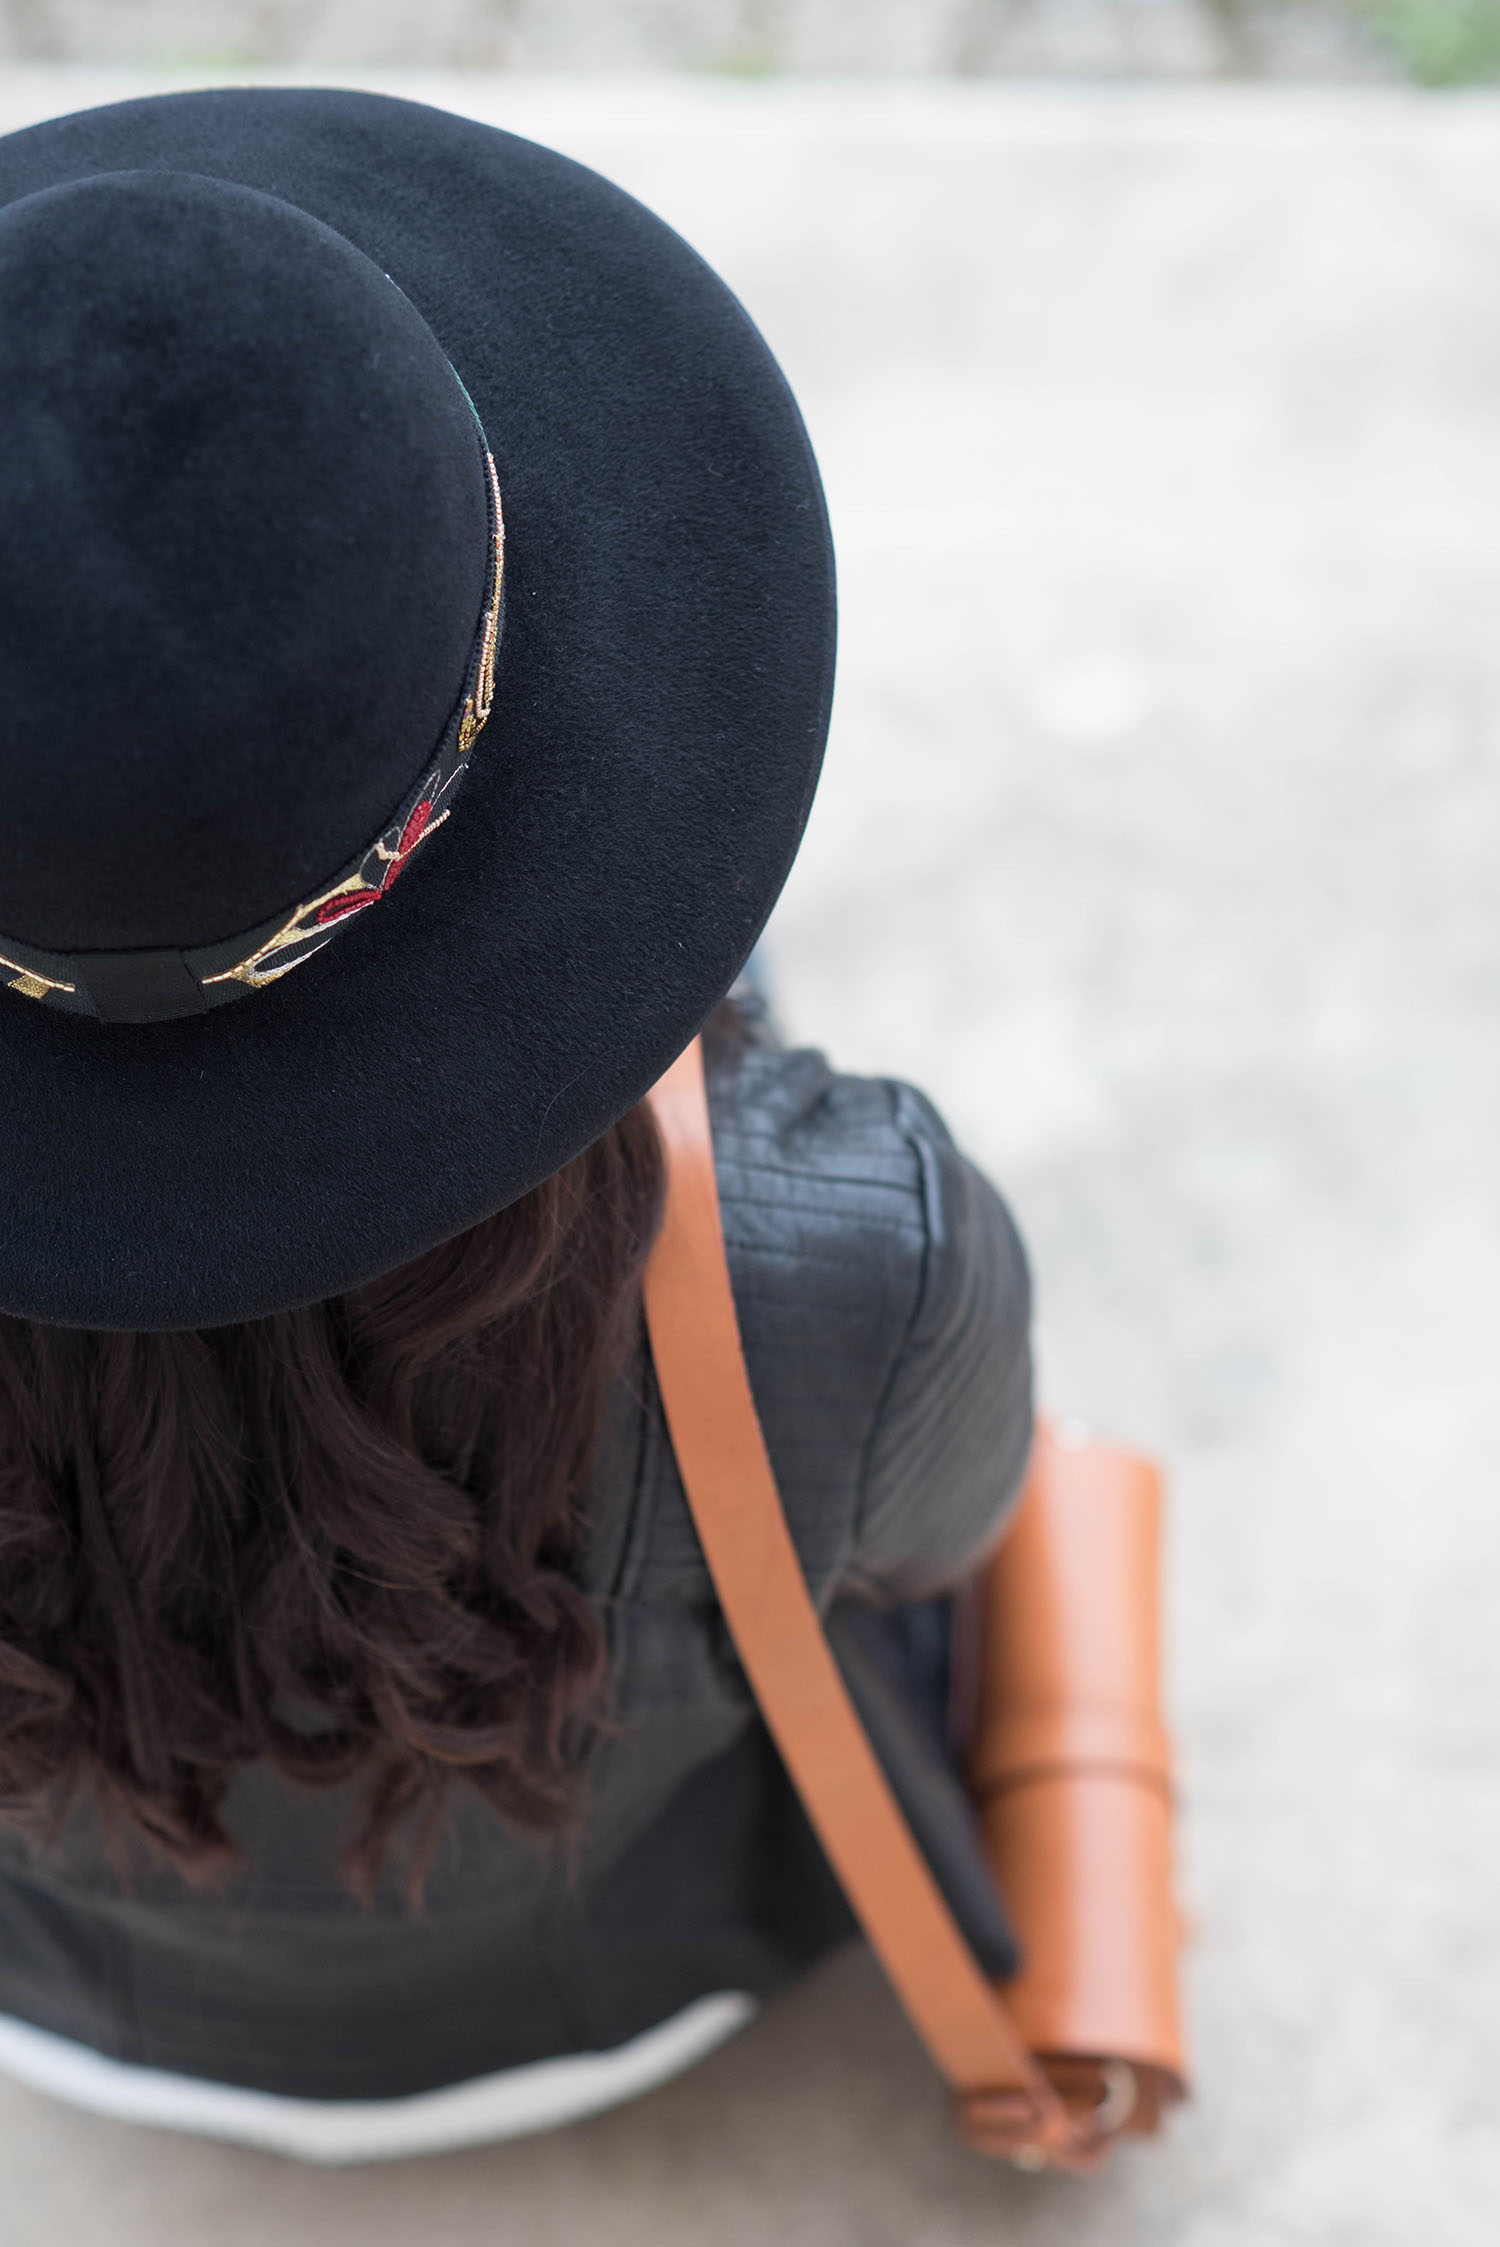 Details of style blogger Cee Fardoe of Coco & Vera wearing a Krasnova Modiste hat and Sezane Claude bag